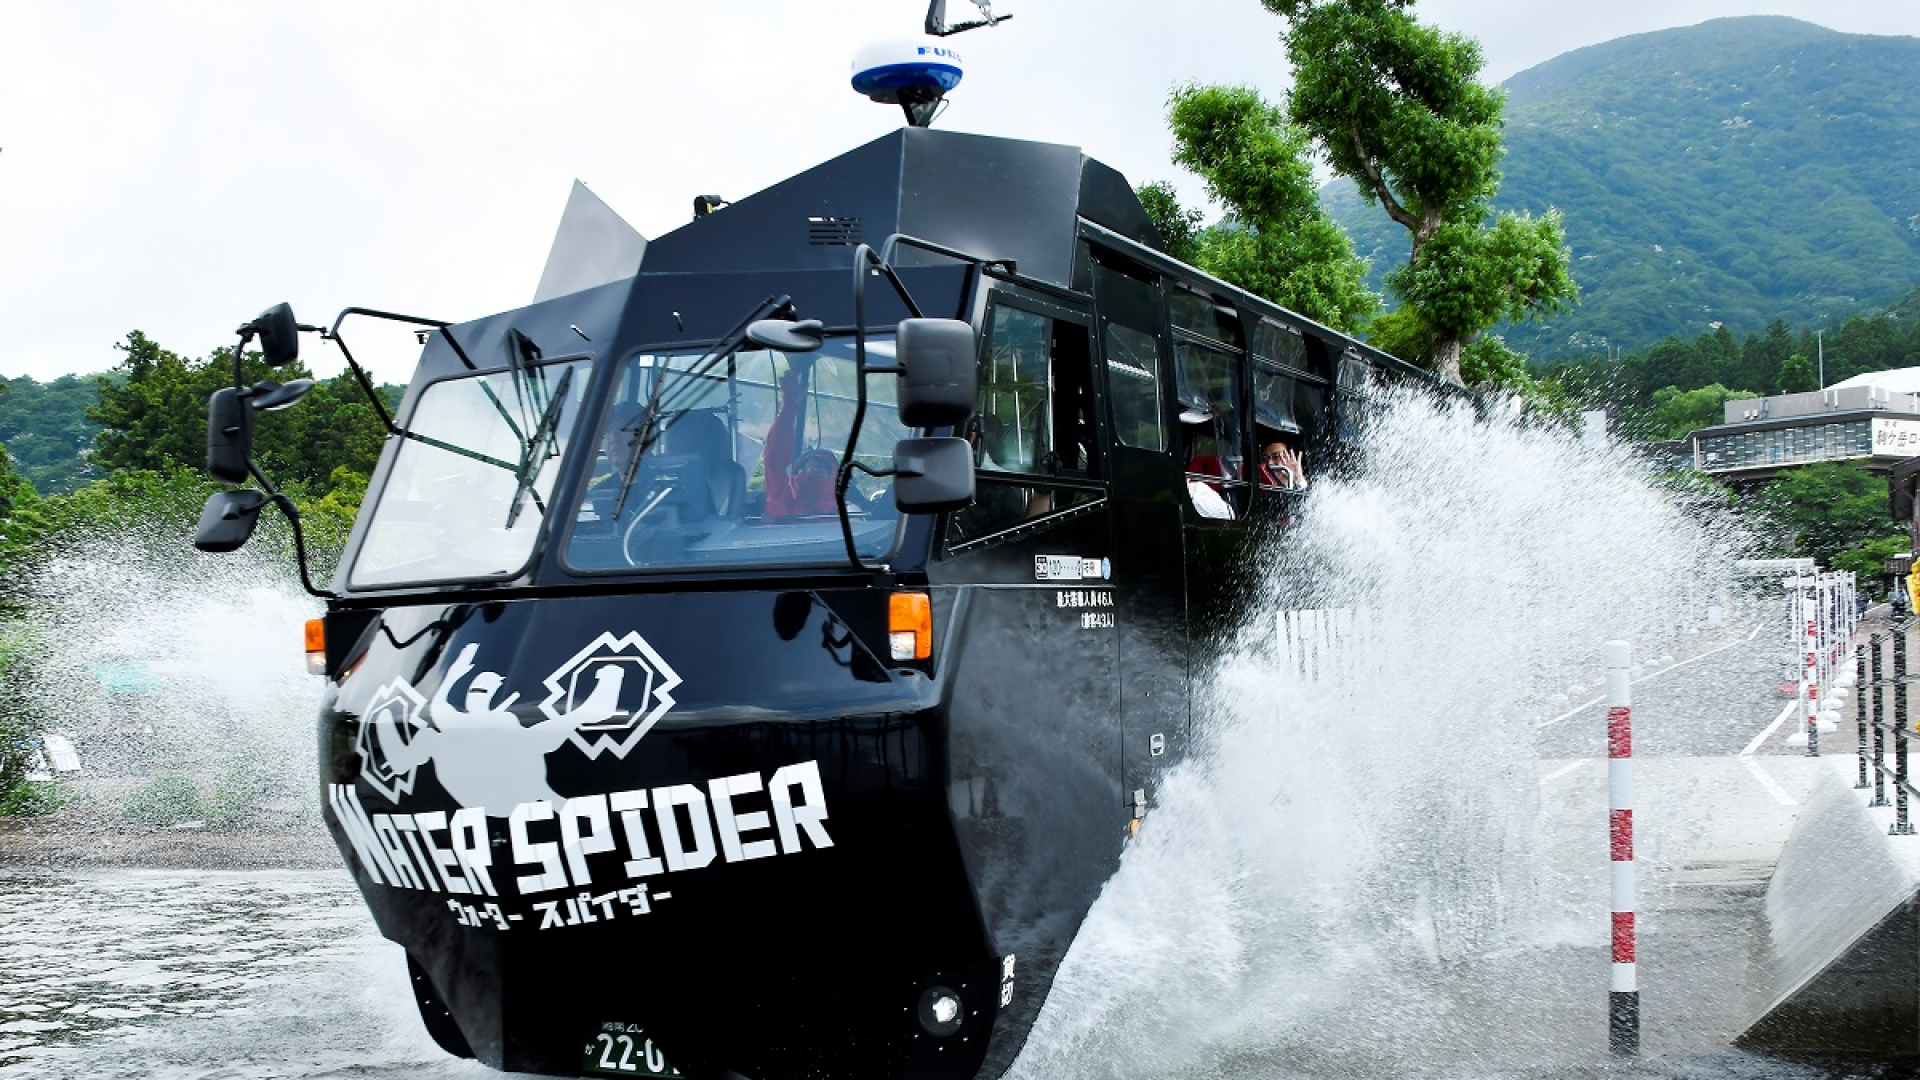 Le bus amphibie Ninja Water Spider